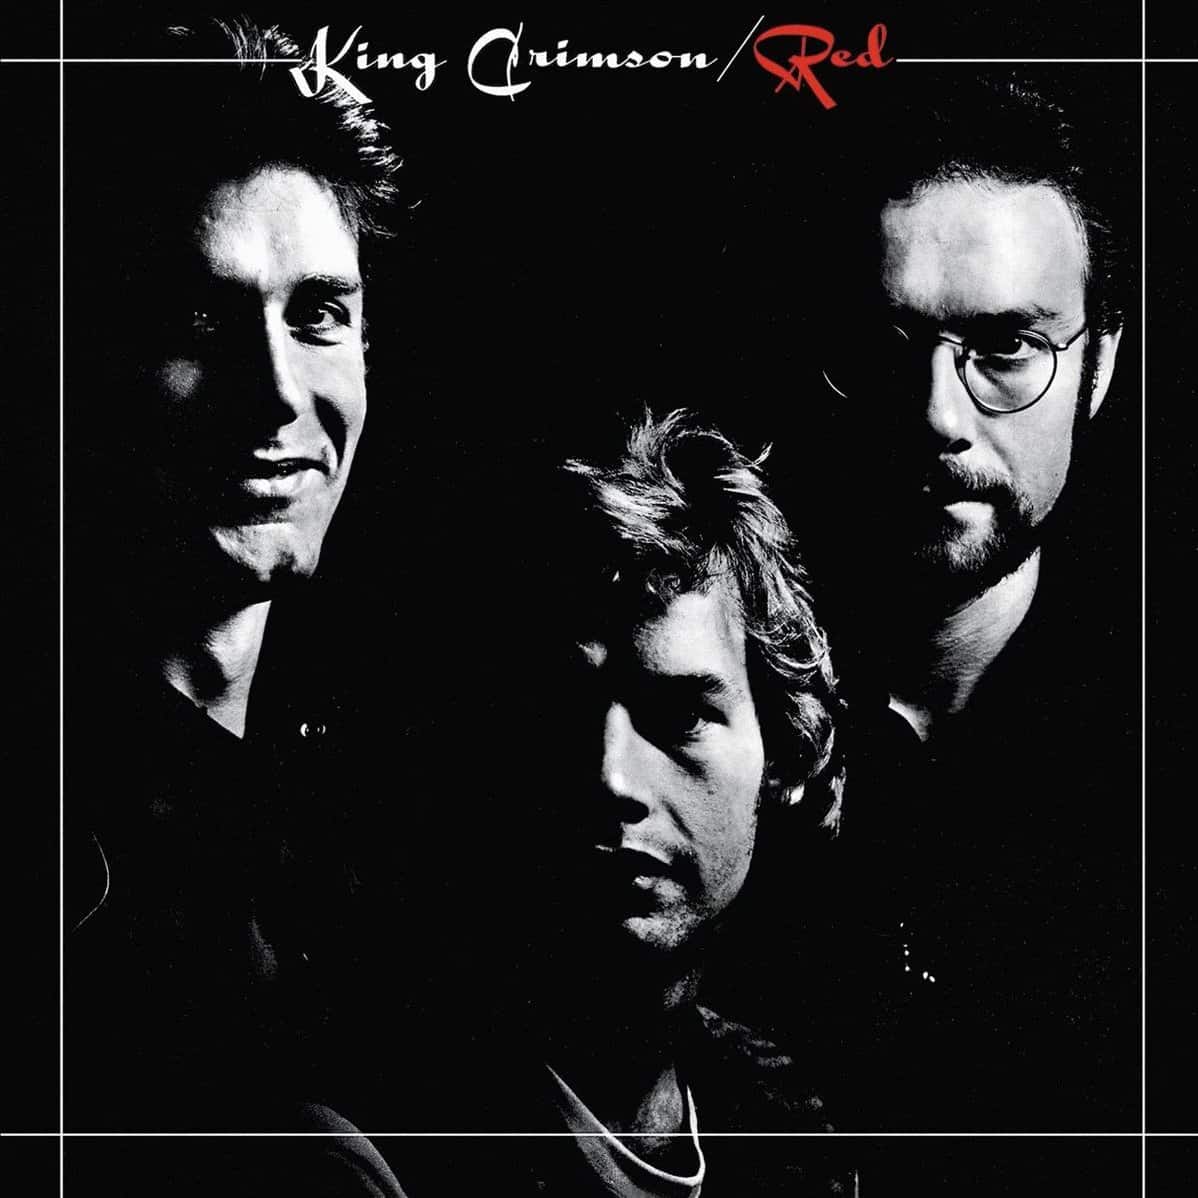 king-crimson-red-vinyl-record-album-front